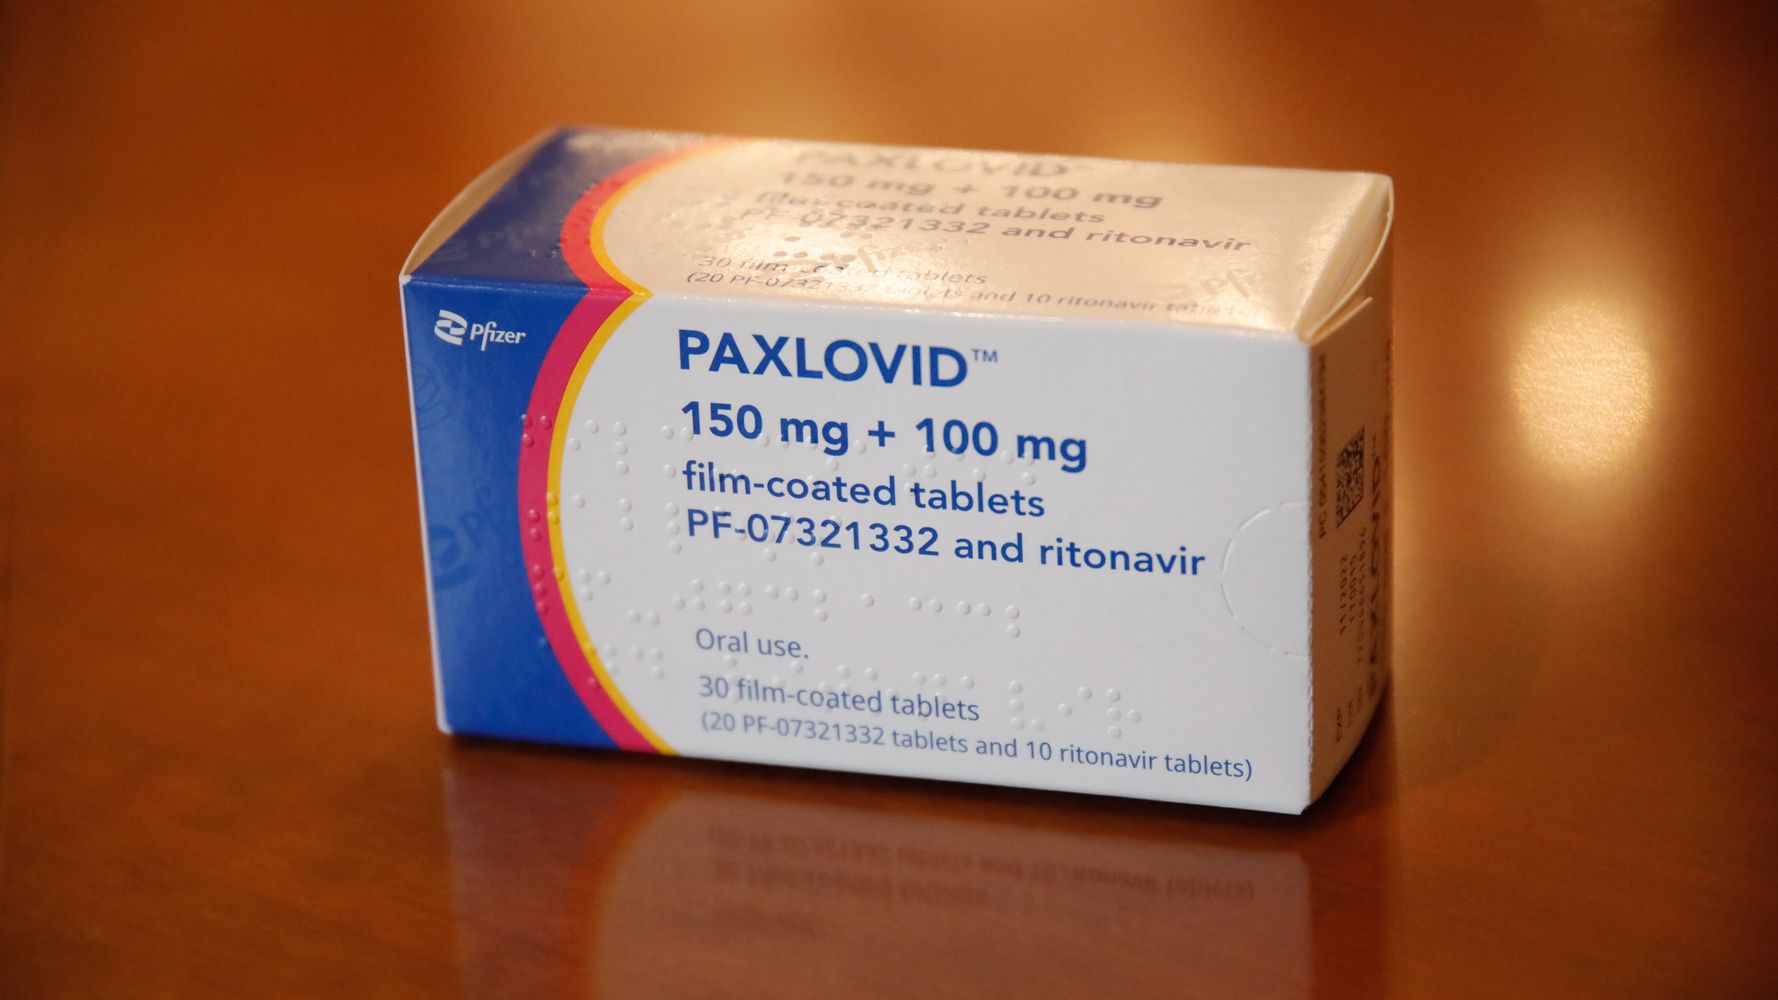 Should You Use Paxlovid If You Have Asymptomatic COVID?